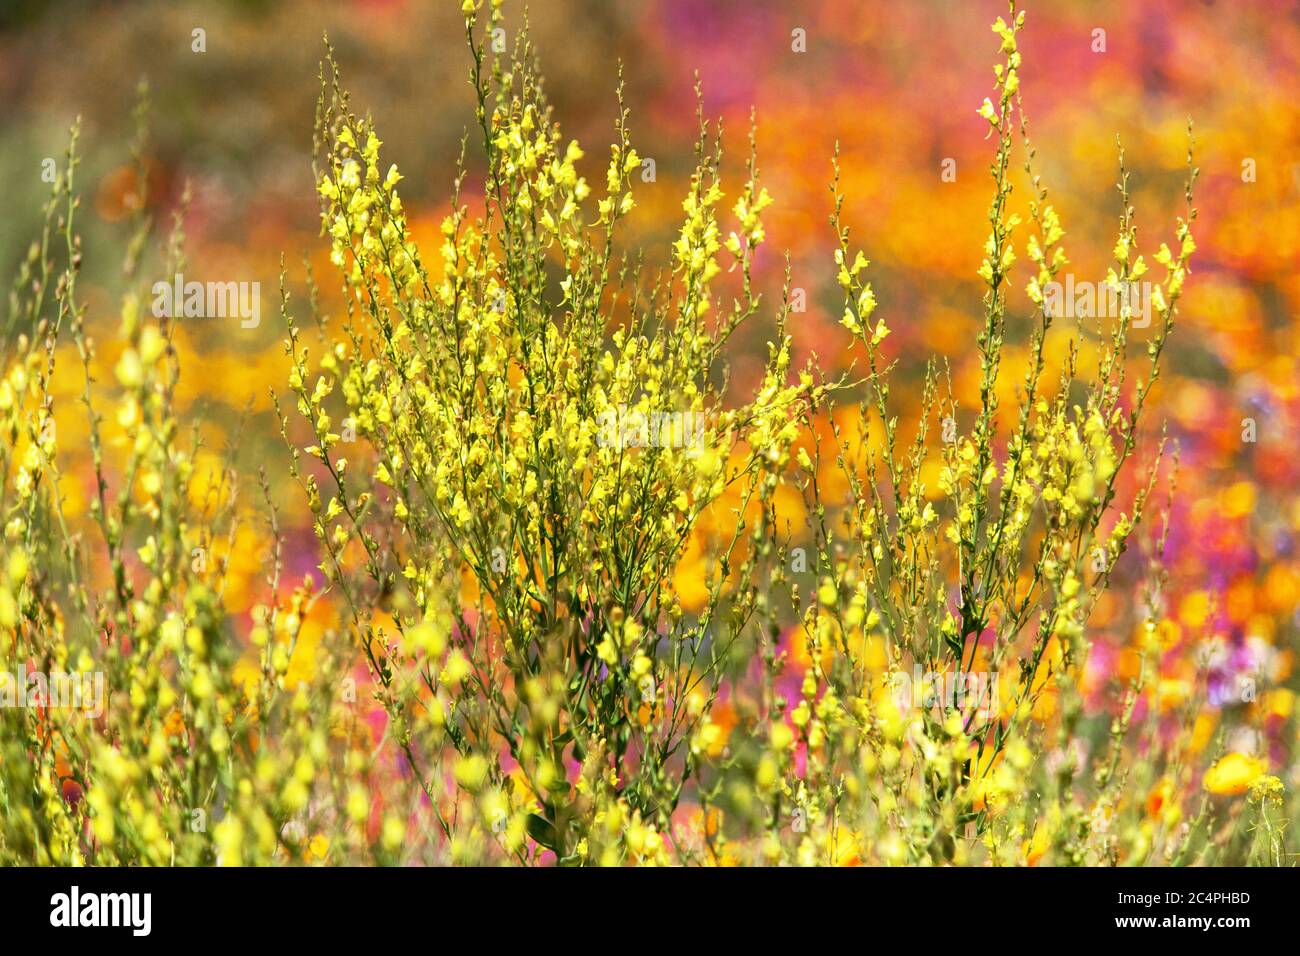 Pastels Colors Summer Meadow Wildflower Garden Flowers Yellow Snapdragon Antirrhinum majus Wildflowers June Plants Flowering Beautiful Colorful Scene Stock Photo